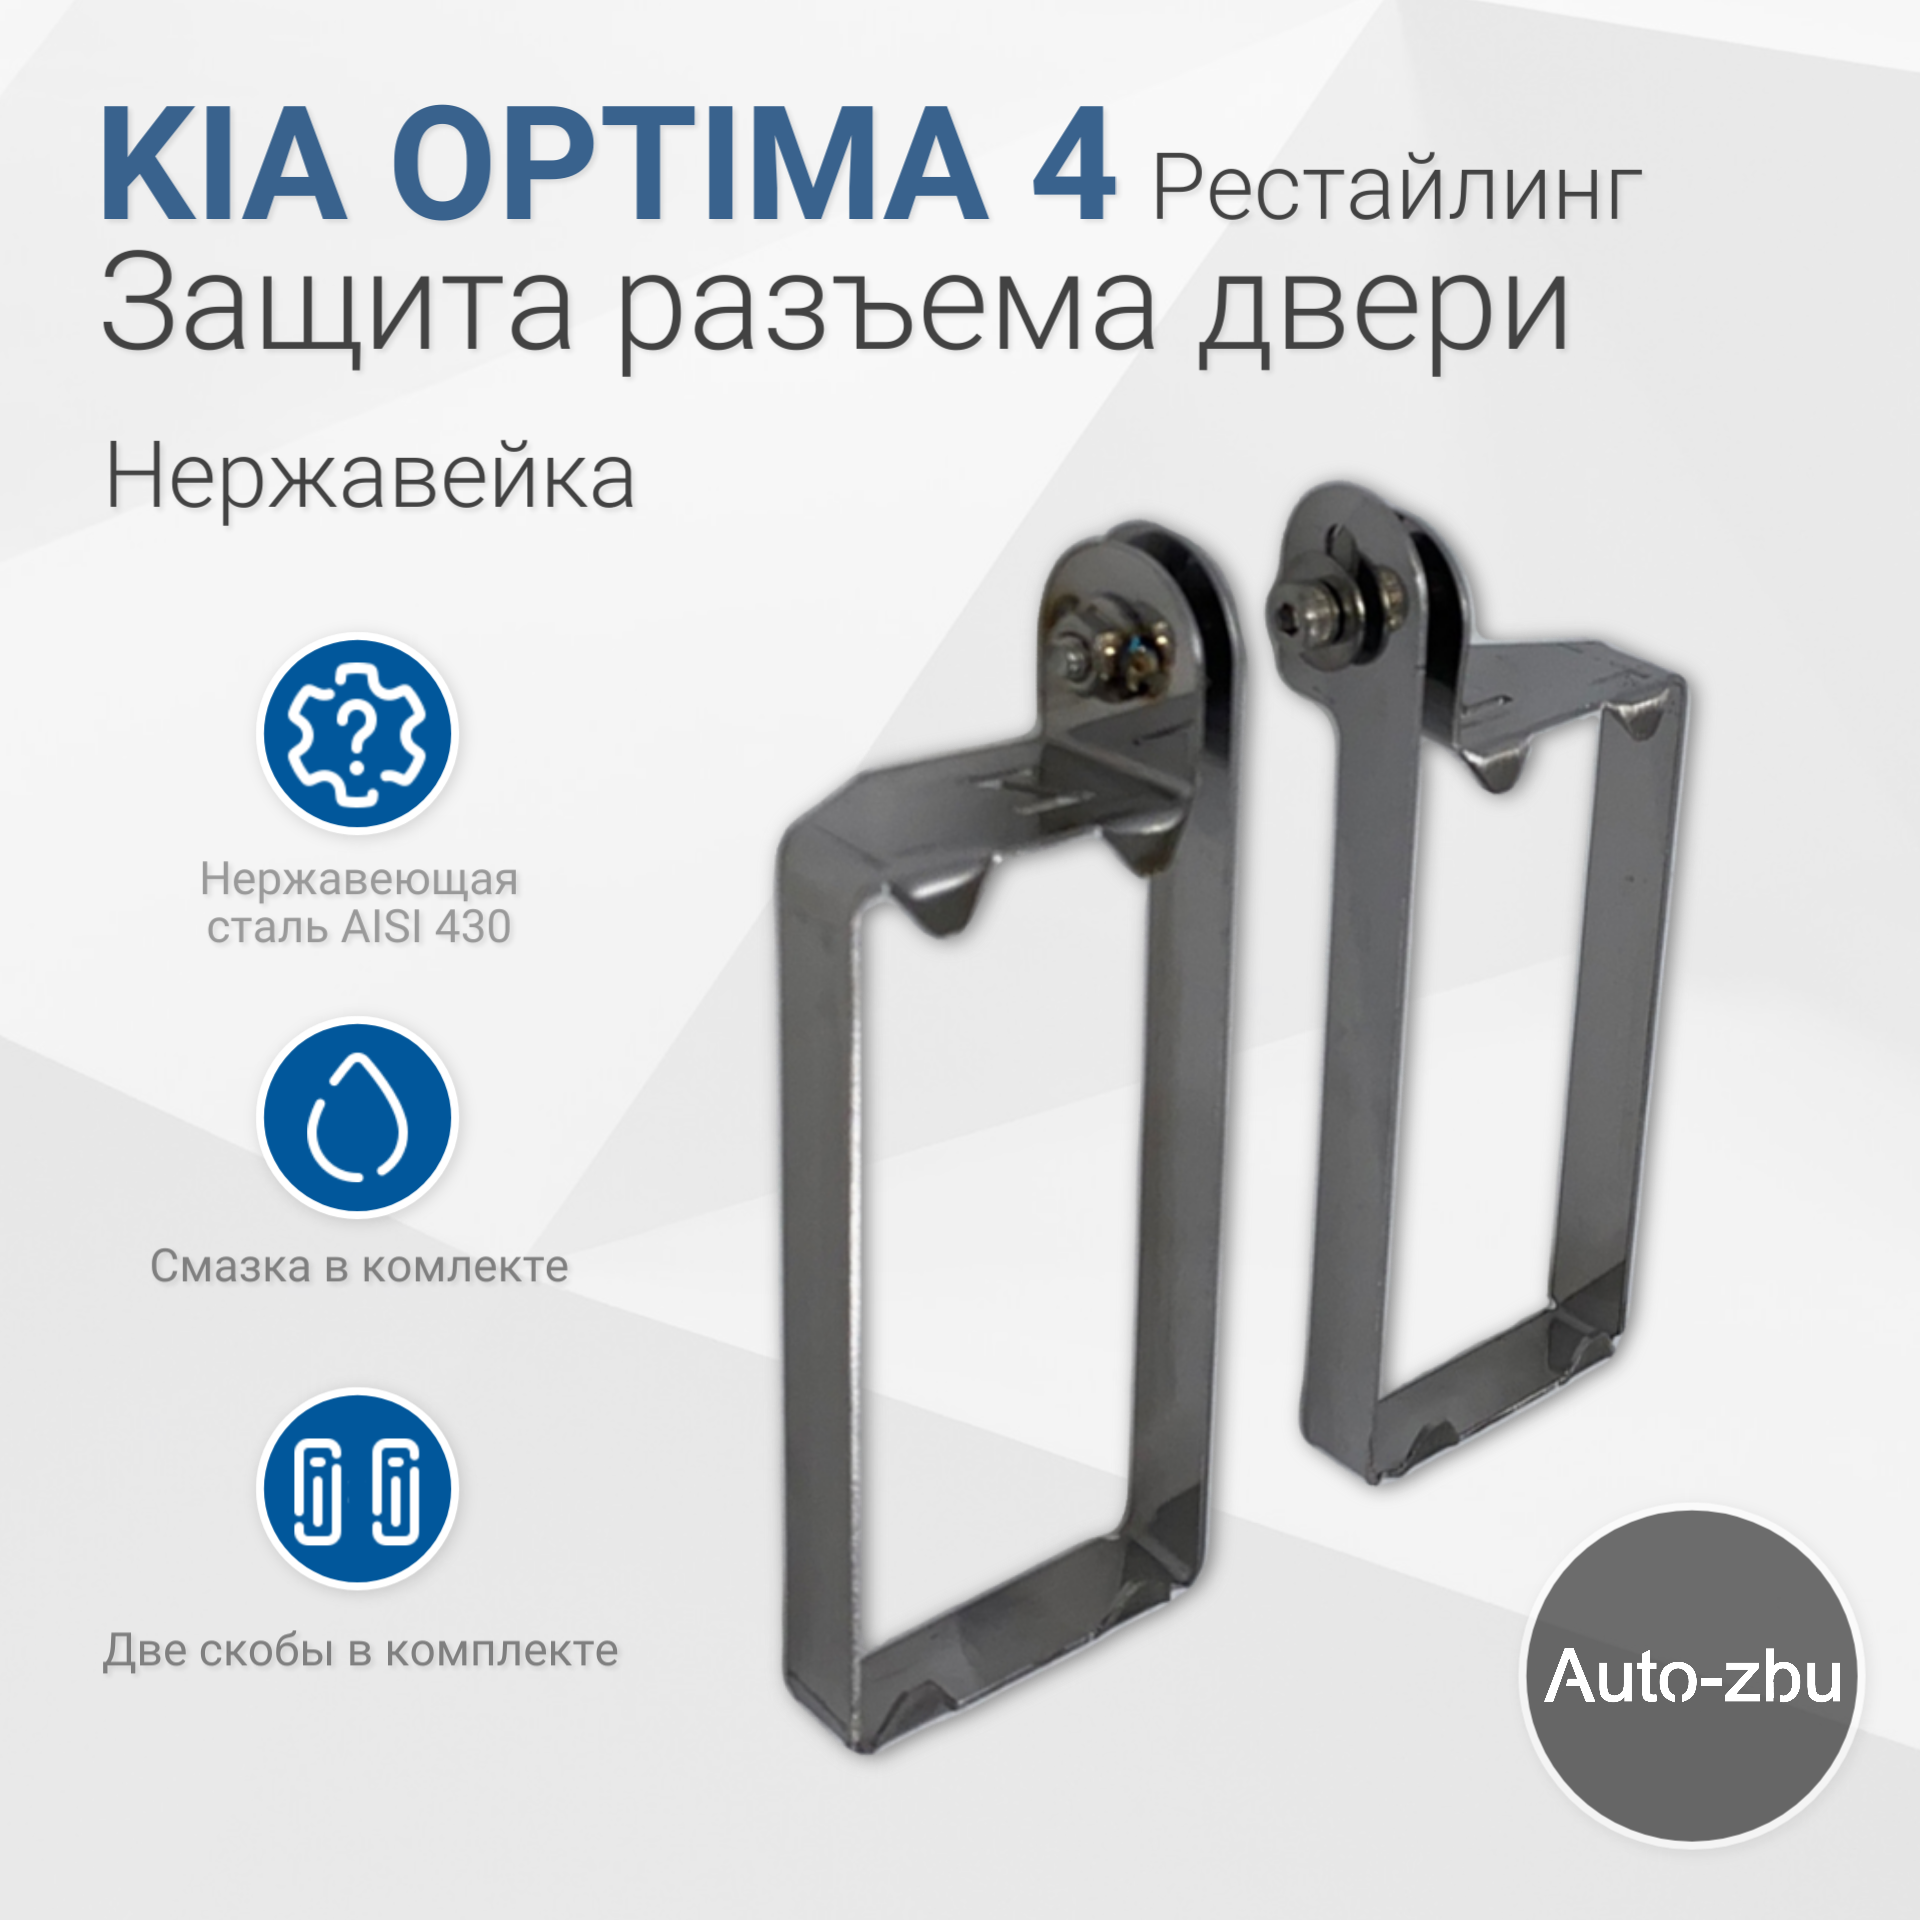 Защита разъема двери Kia Optima IV Рестайлинг (2018-2020)